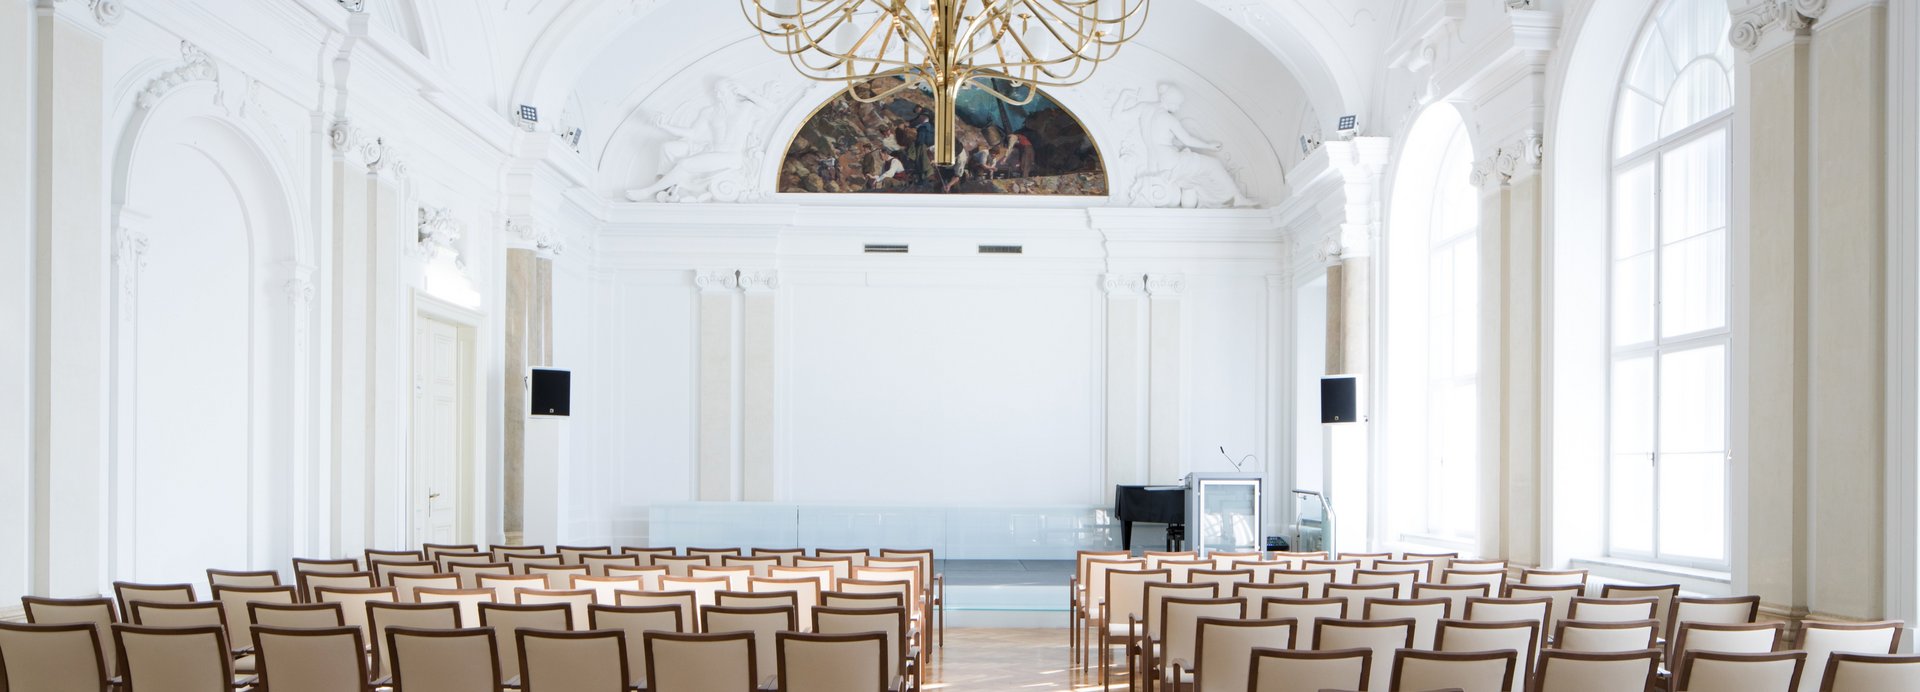 Auditorium of the Montanuniversität.